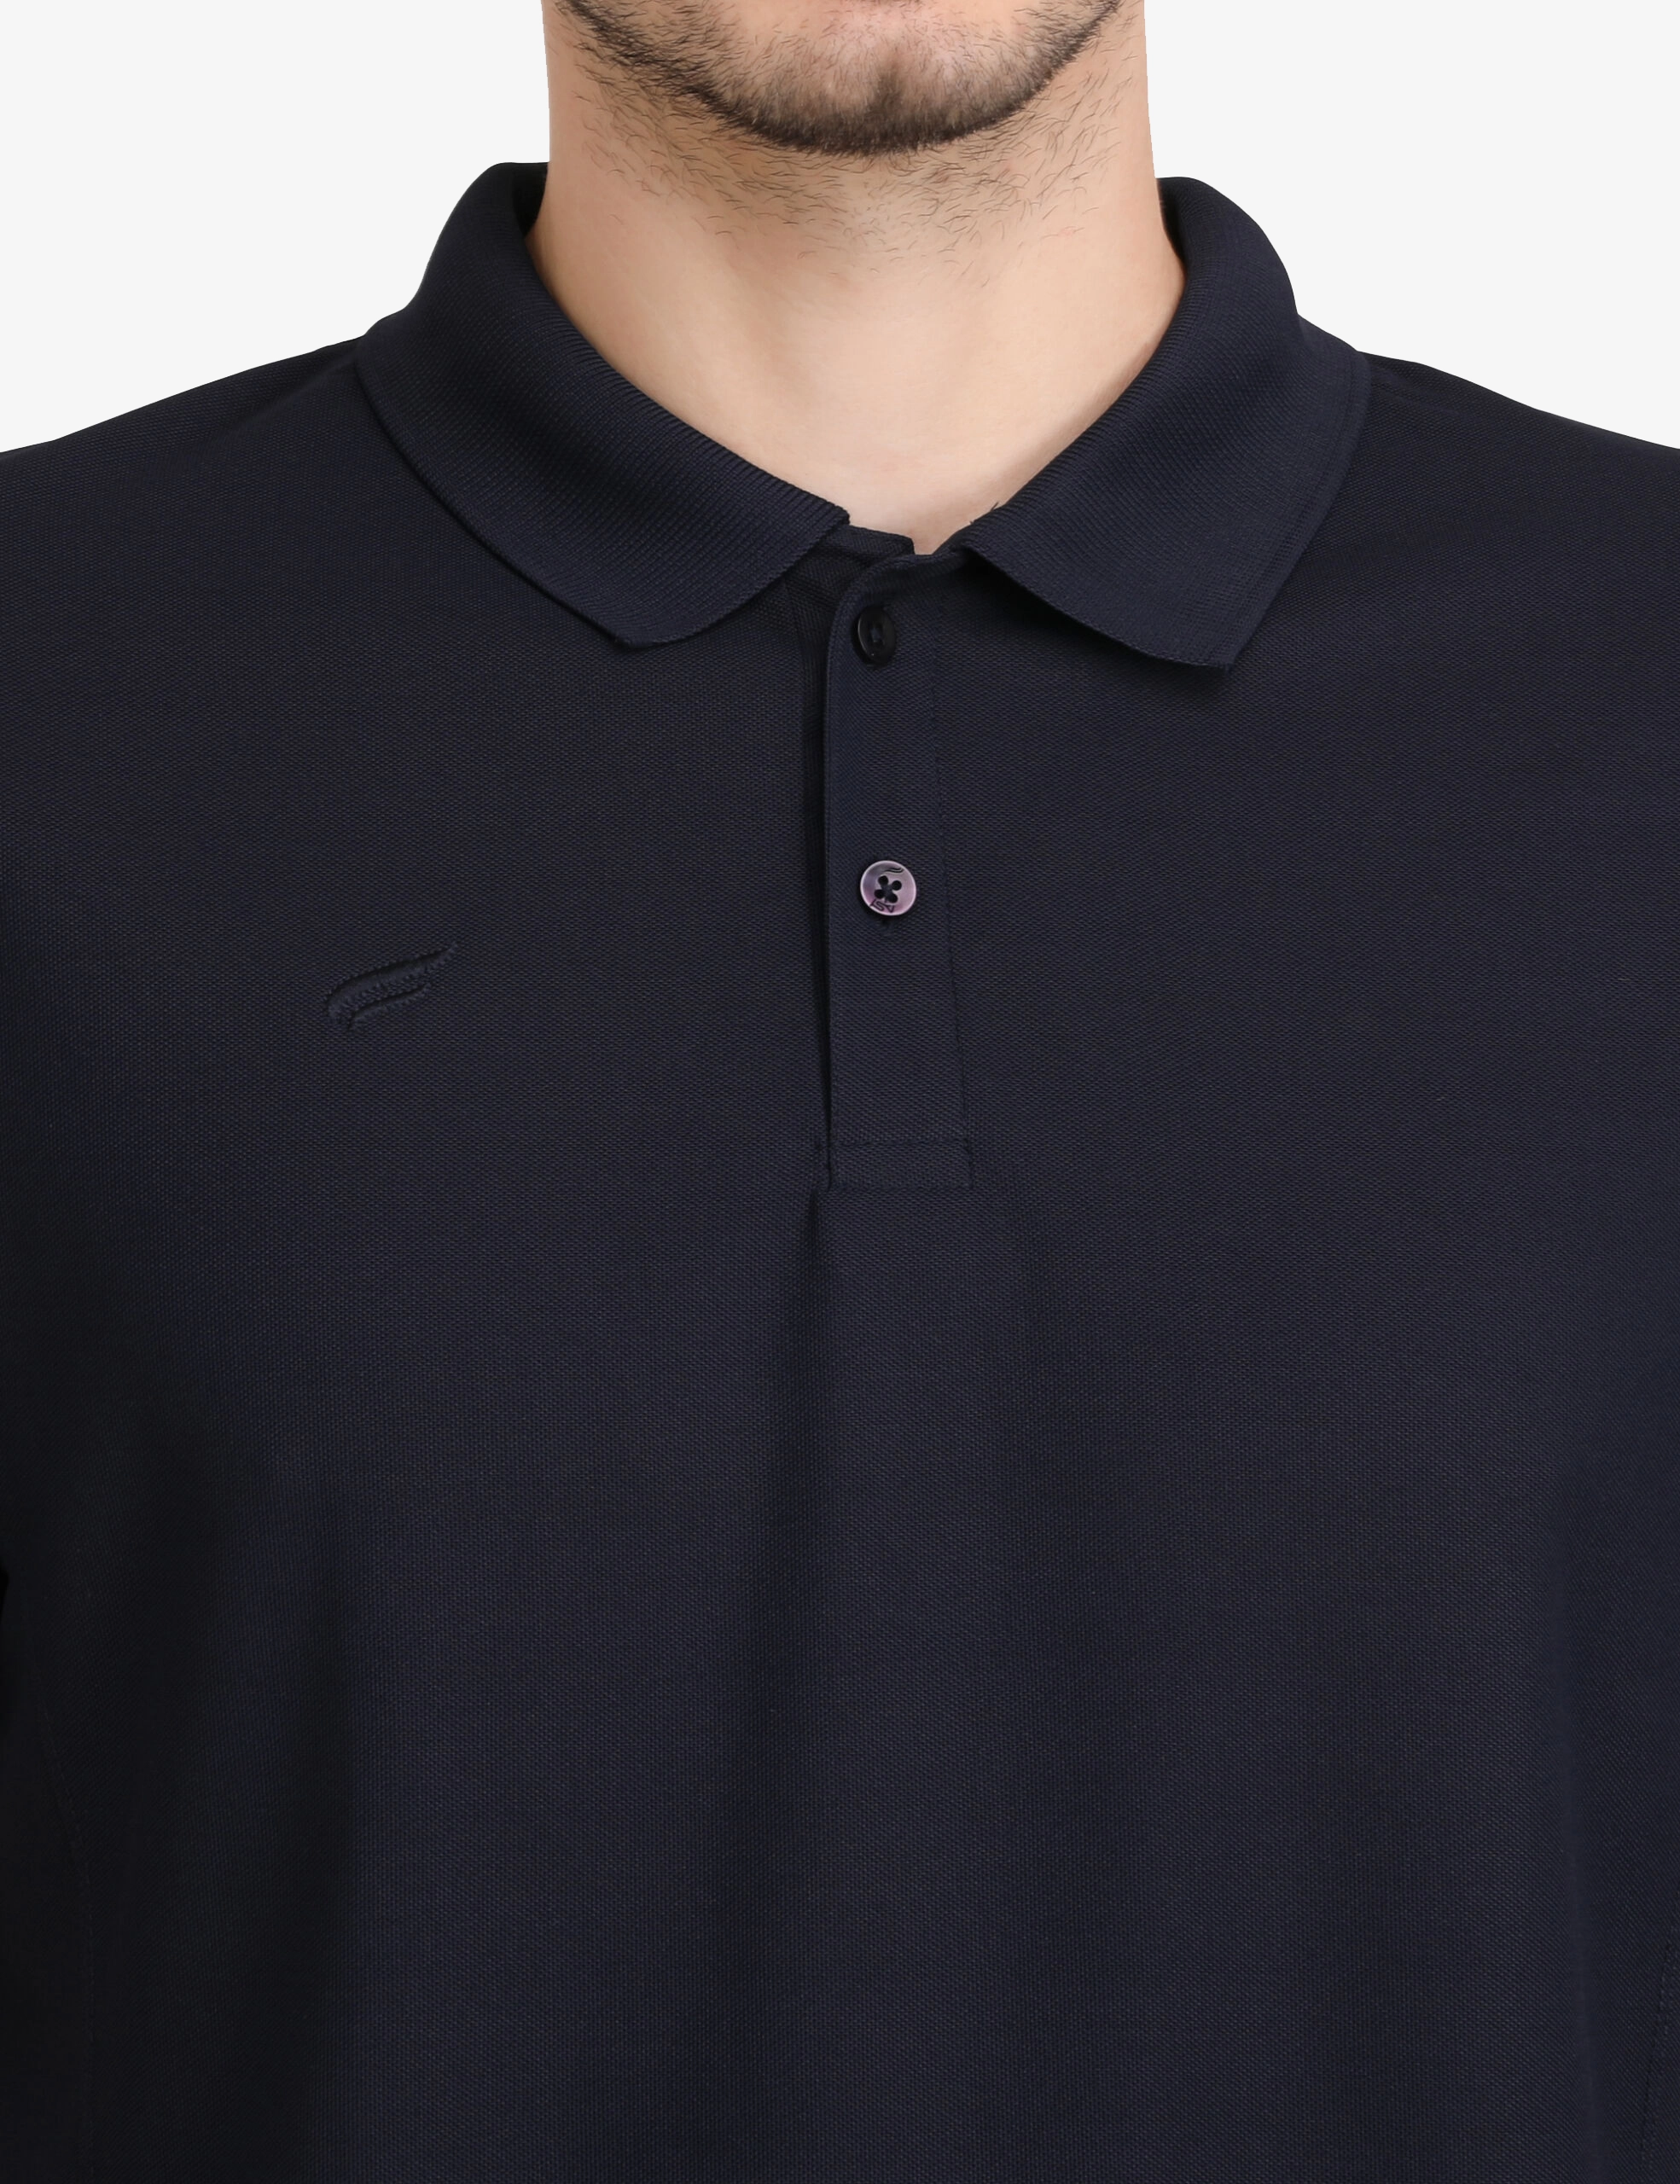 ASI Mac Sports T-Shirt Navy Blue Color for Men